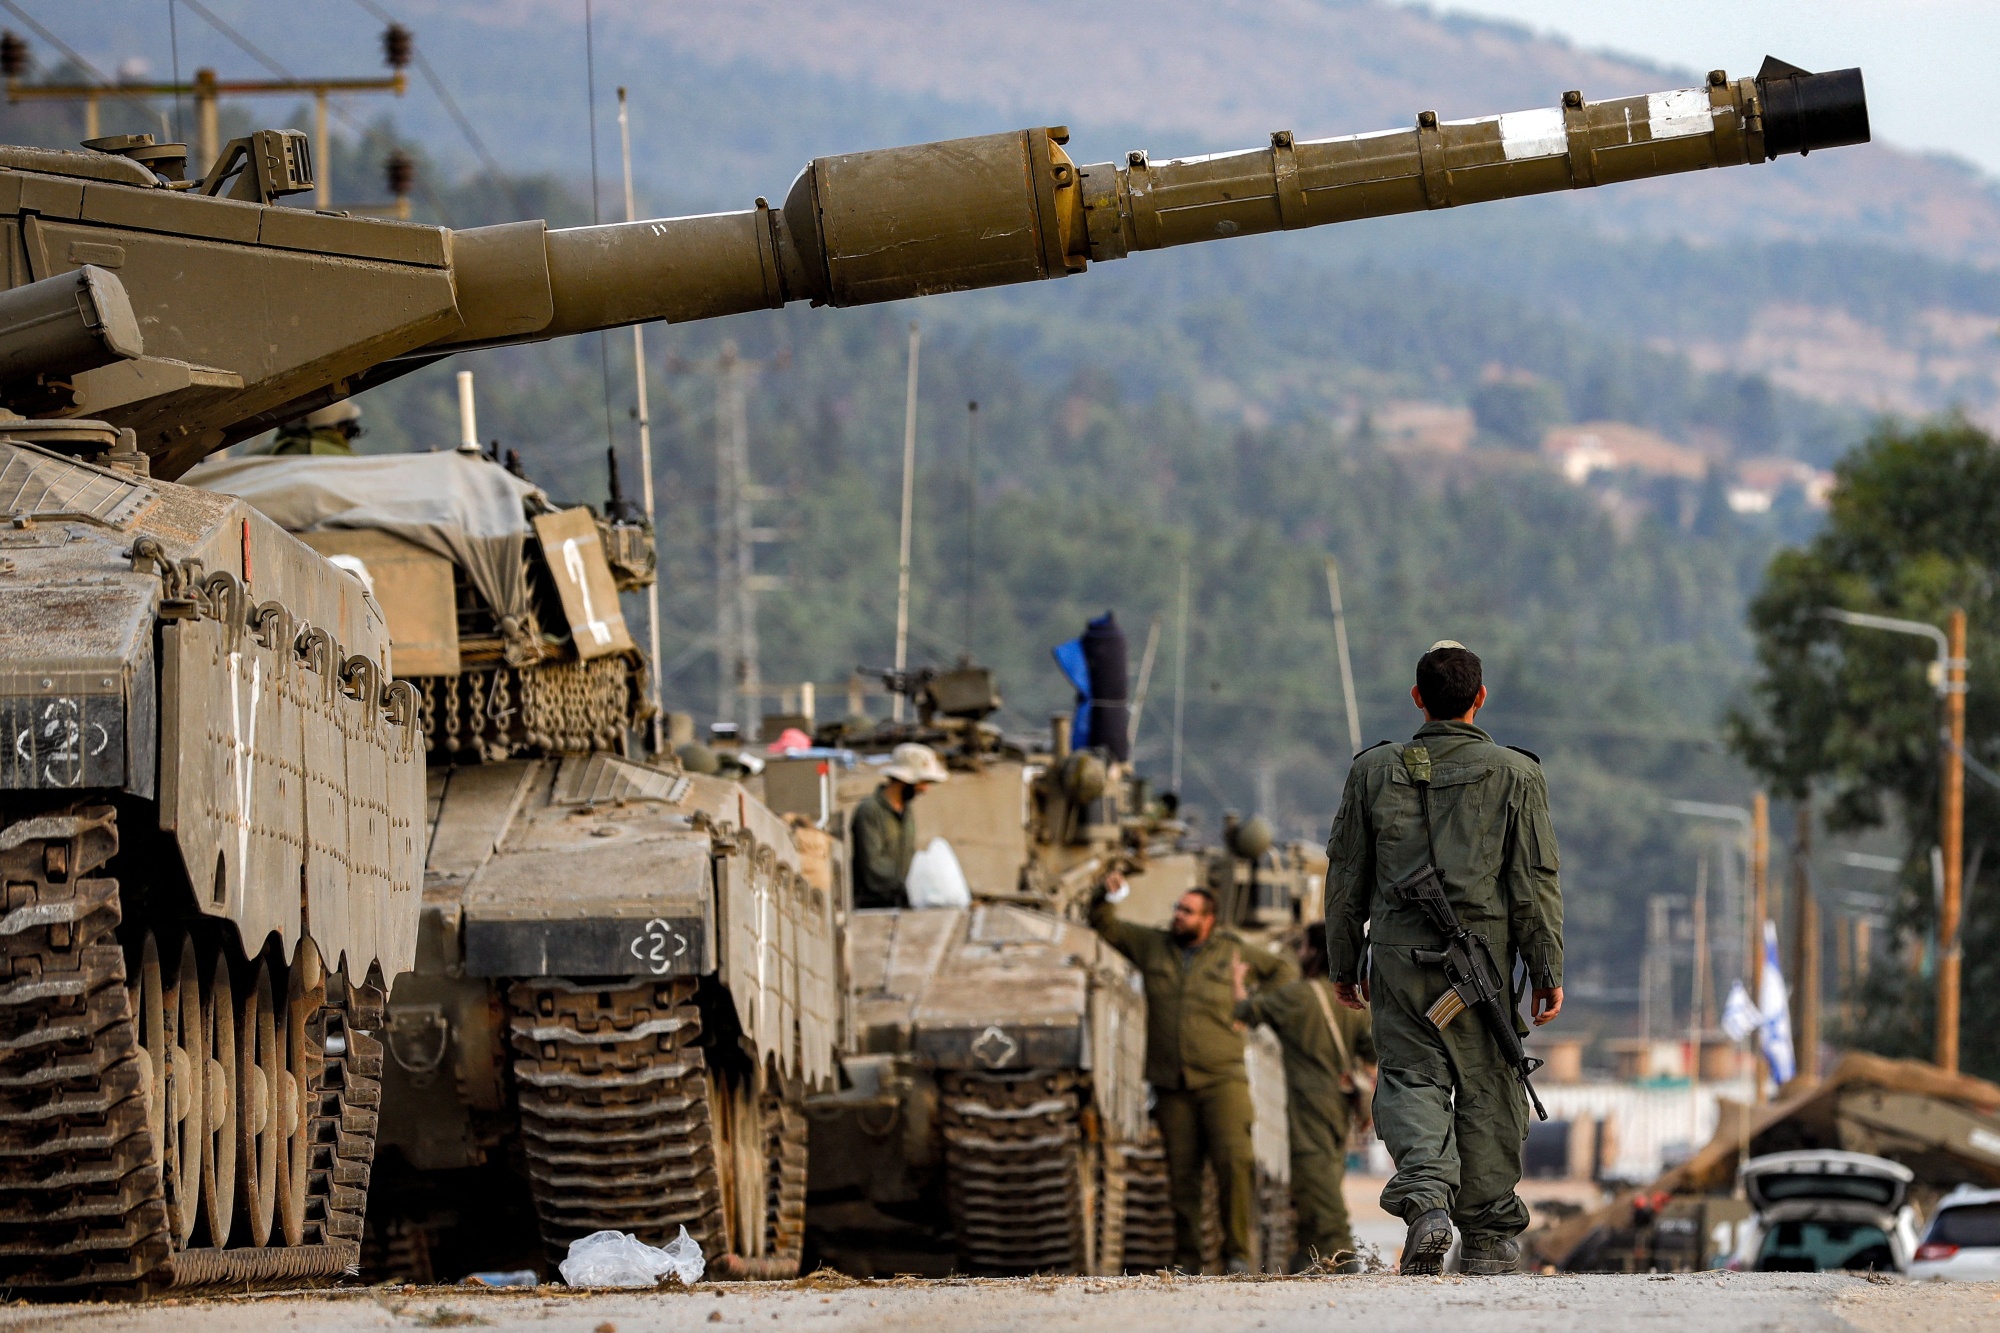 Israel army bombarding the Lebanese army1